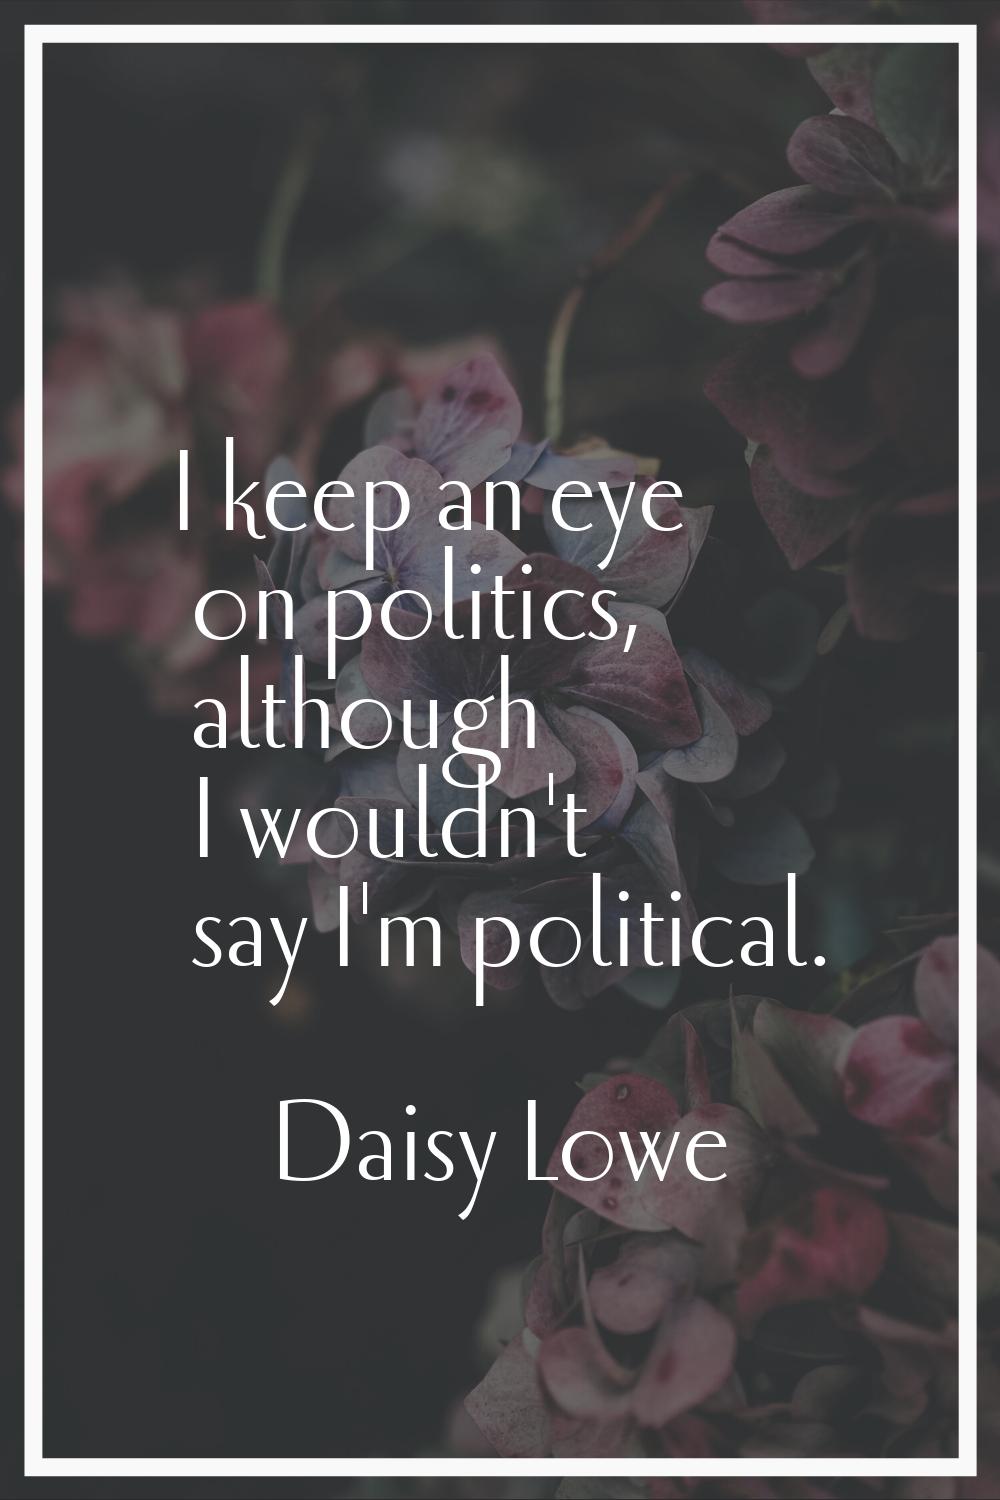 I keep an eye on politics, although I wouldn't say I'm political.